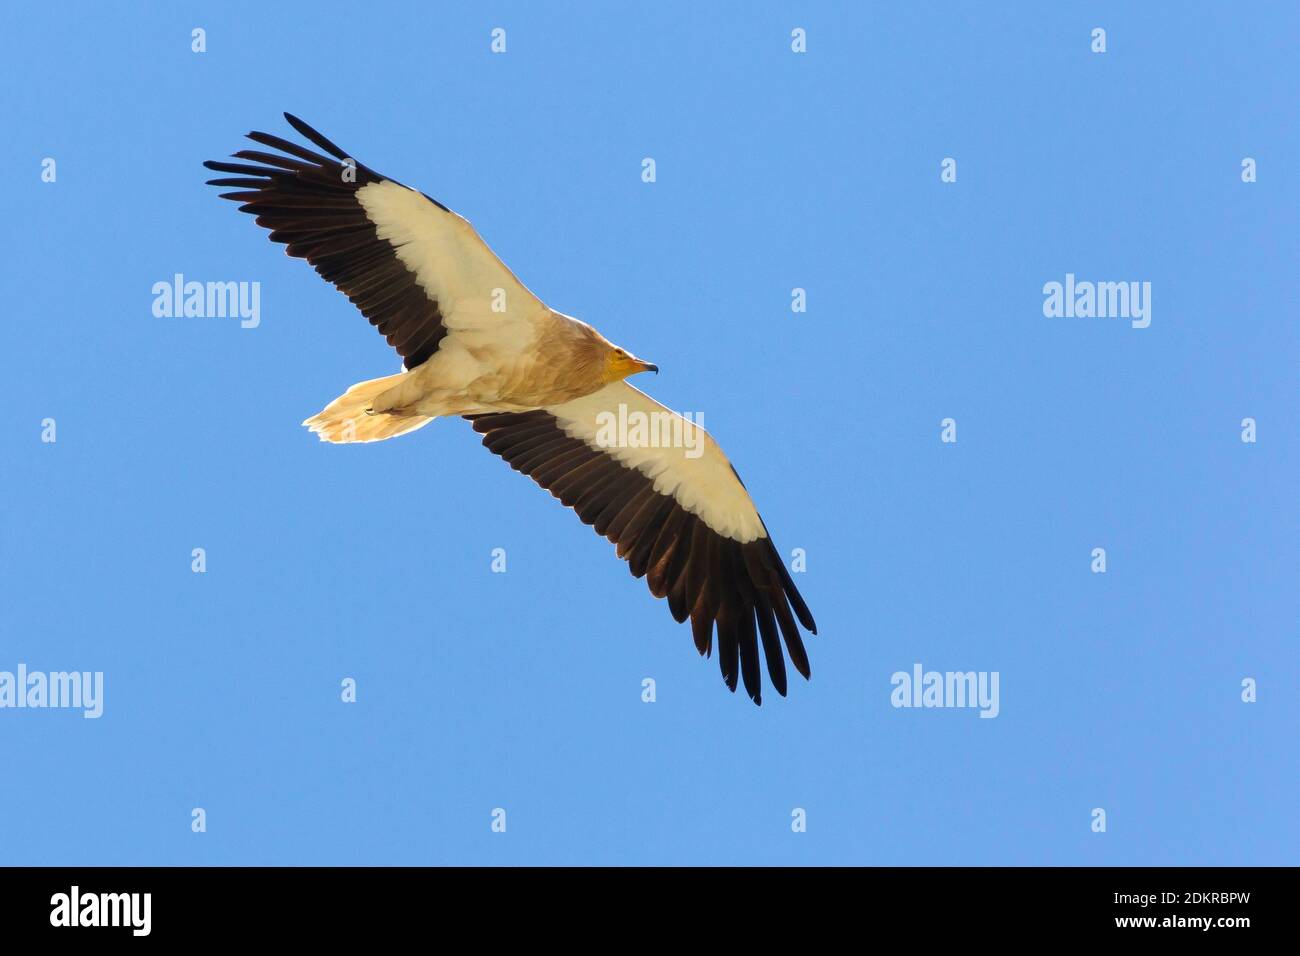 Volwassen Aasgier in vlucht, Adult Egyptian Vulture in flight Stock Photo